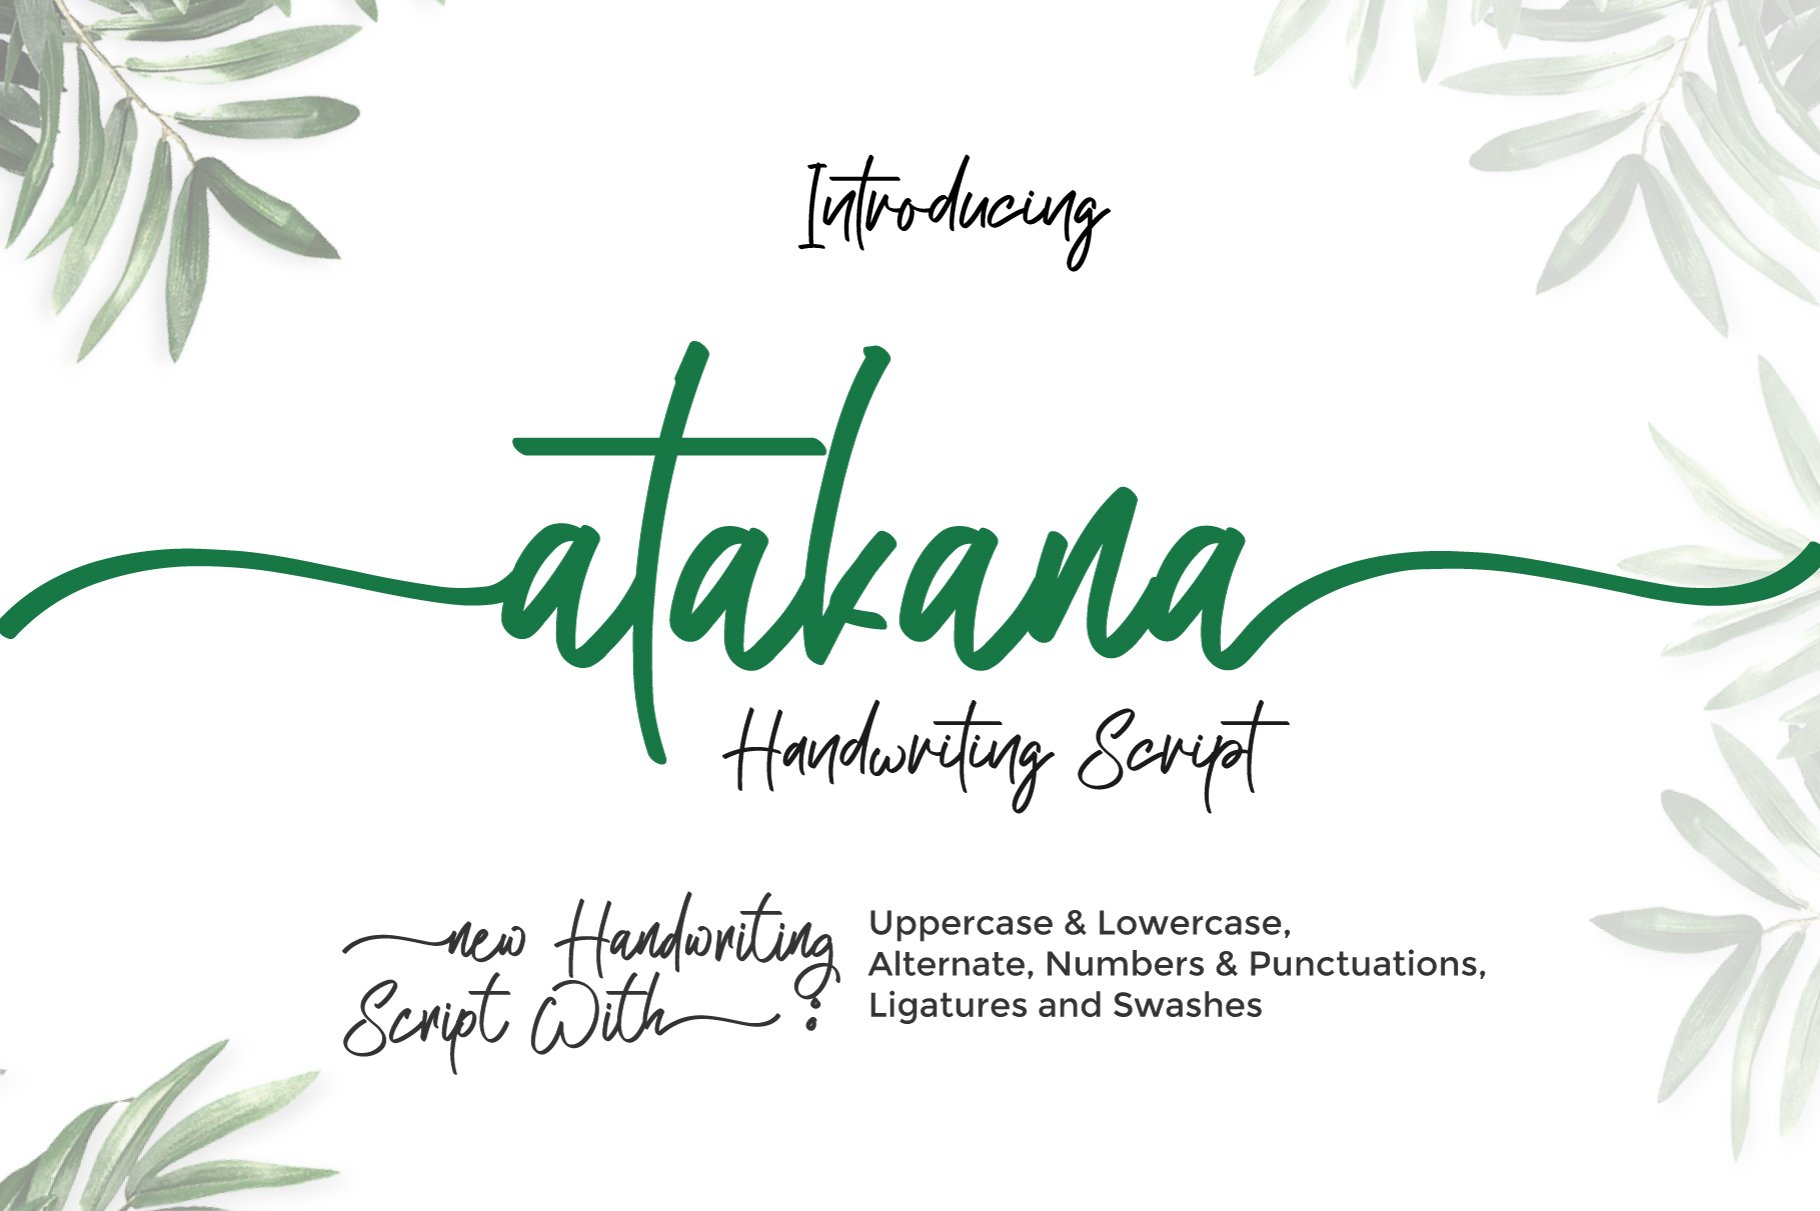 Atakana - Handwriting Script Font cover image.